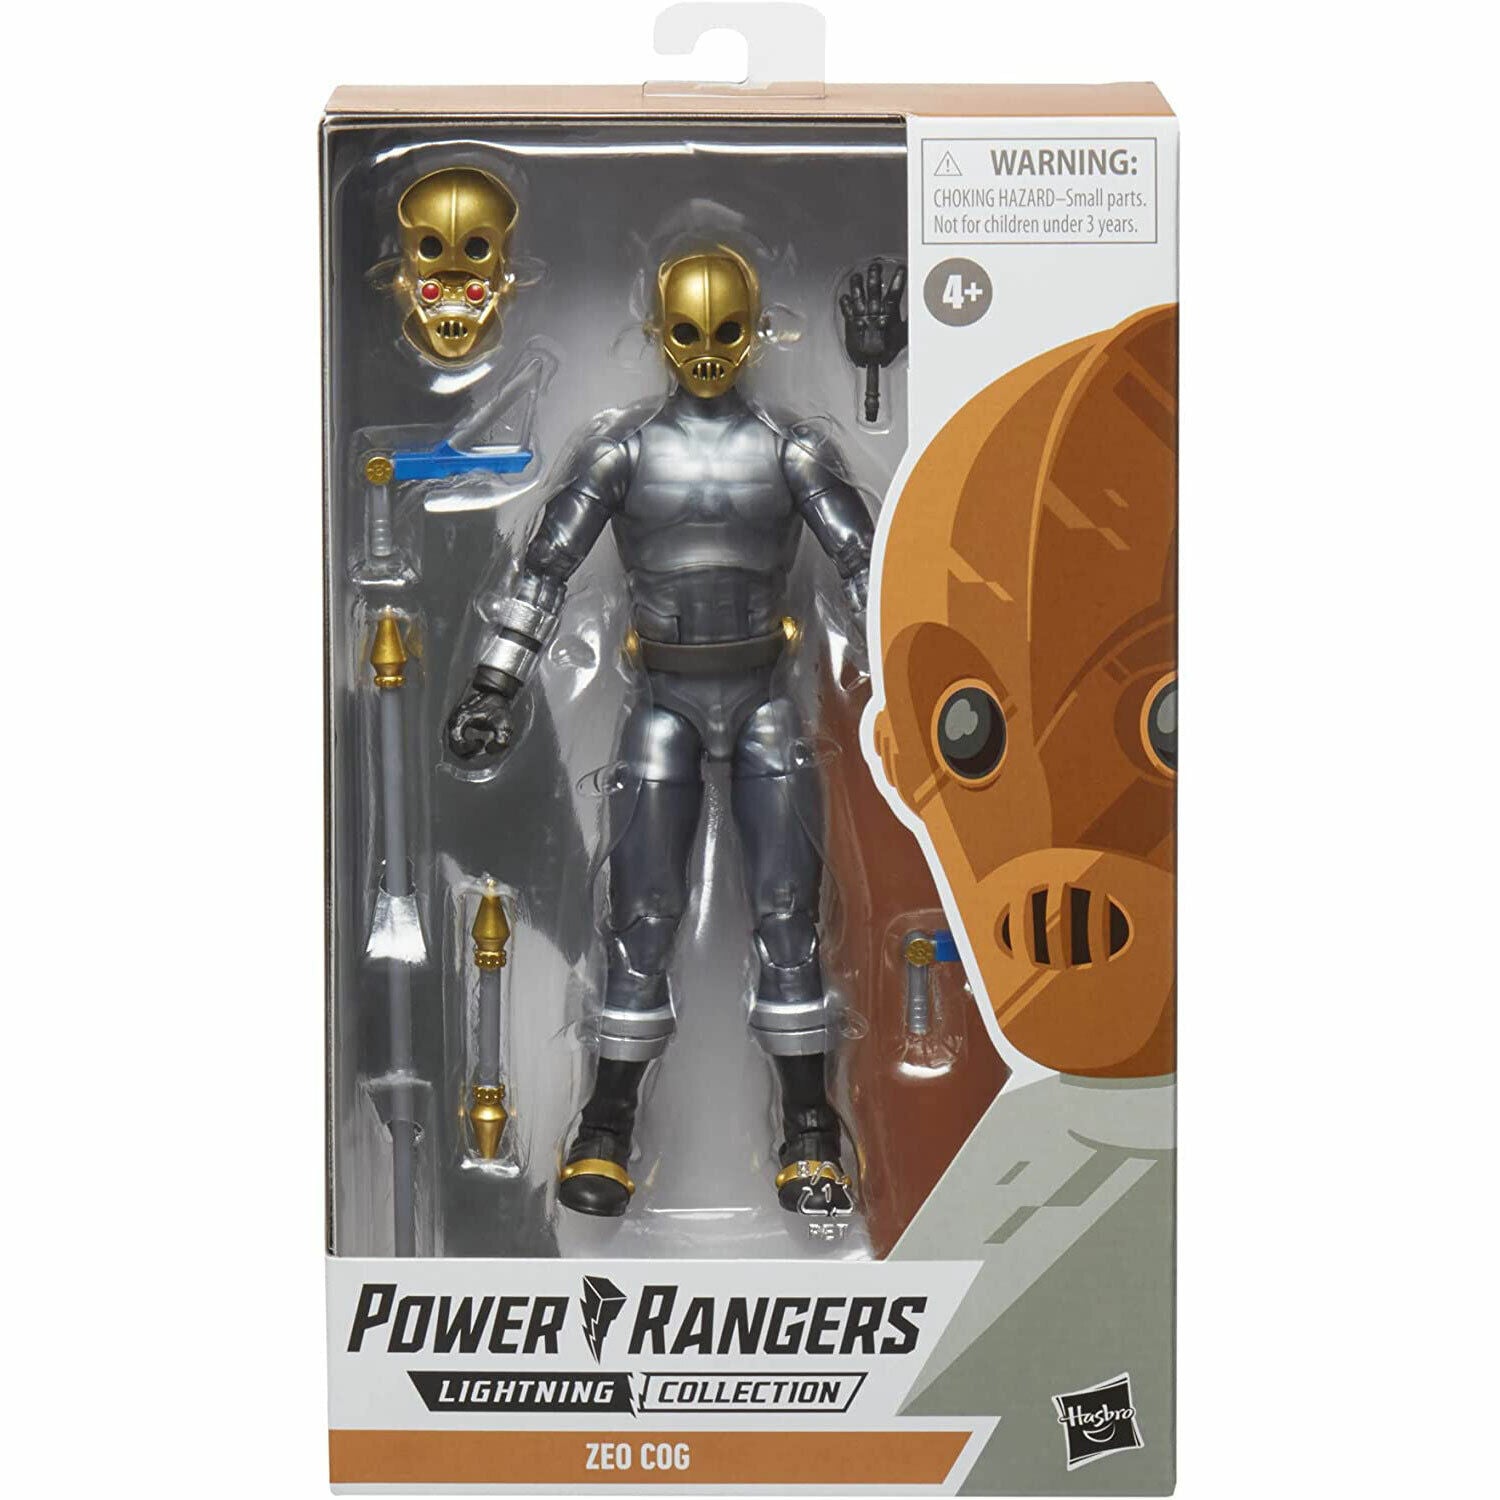 New Power Rangers Zeo Cog Action Figure - Lightning Collection